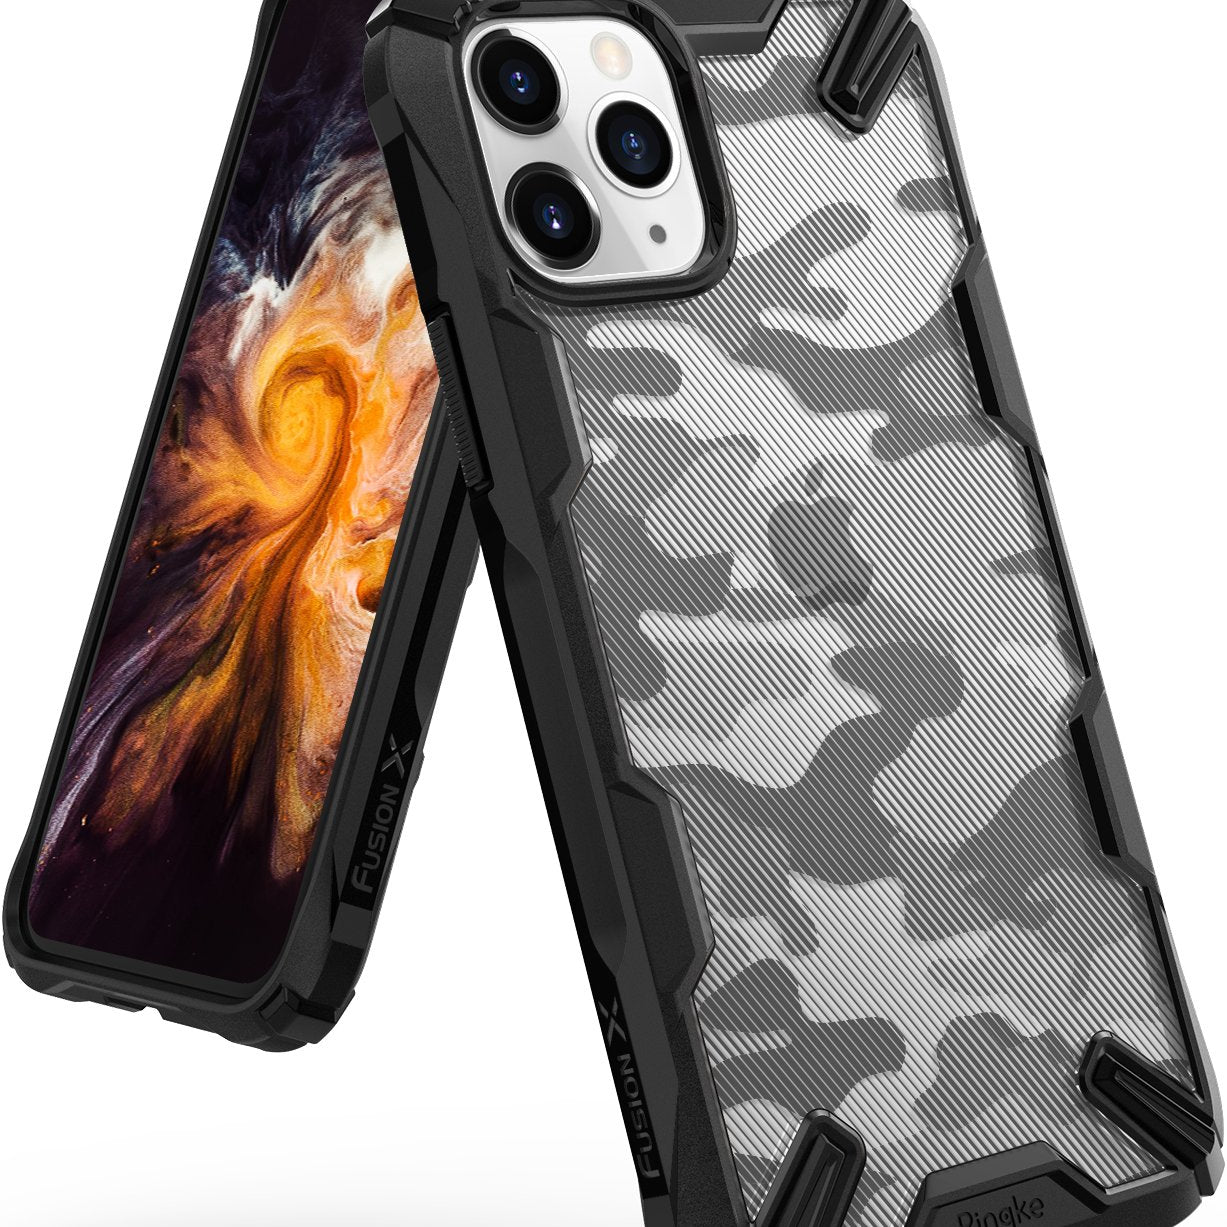 Ringke Fusion X Design Case Compatible with iPhone 11 Pro Max Case Cover 6.5" Camo Black